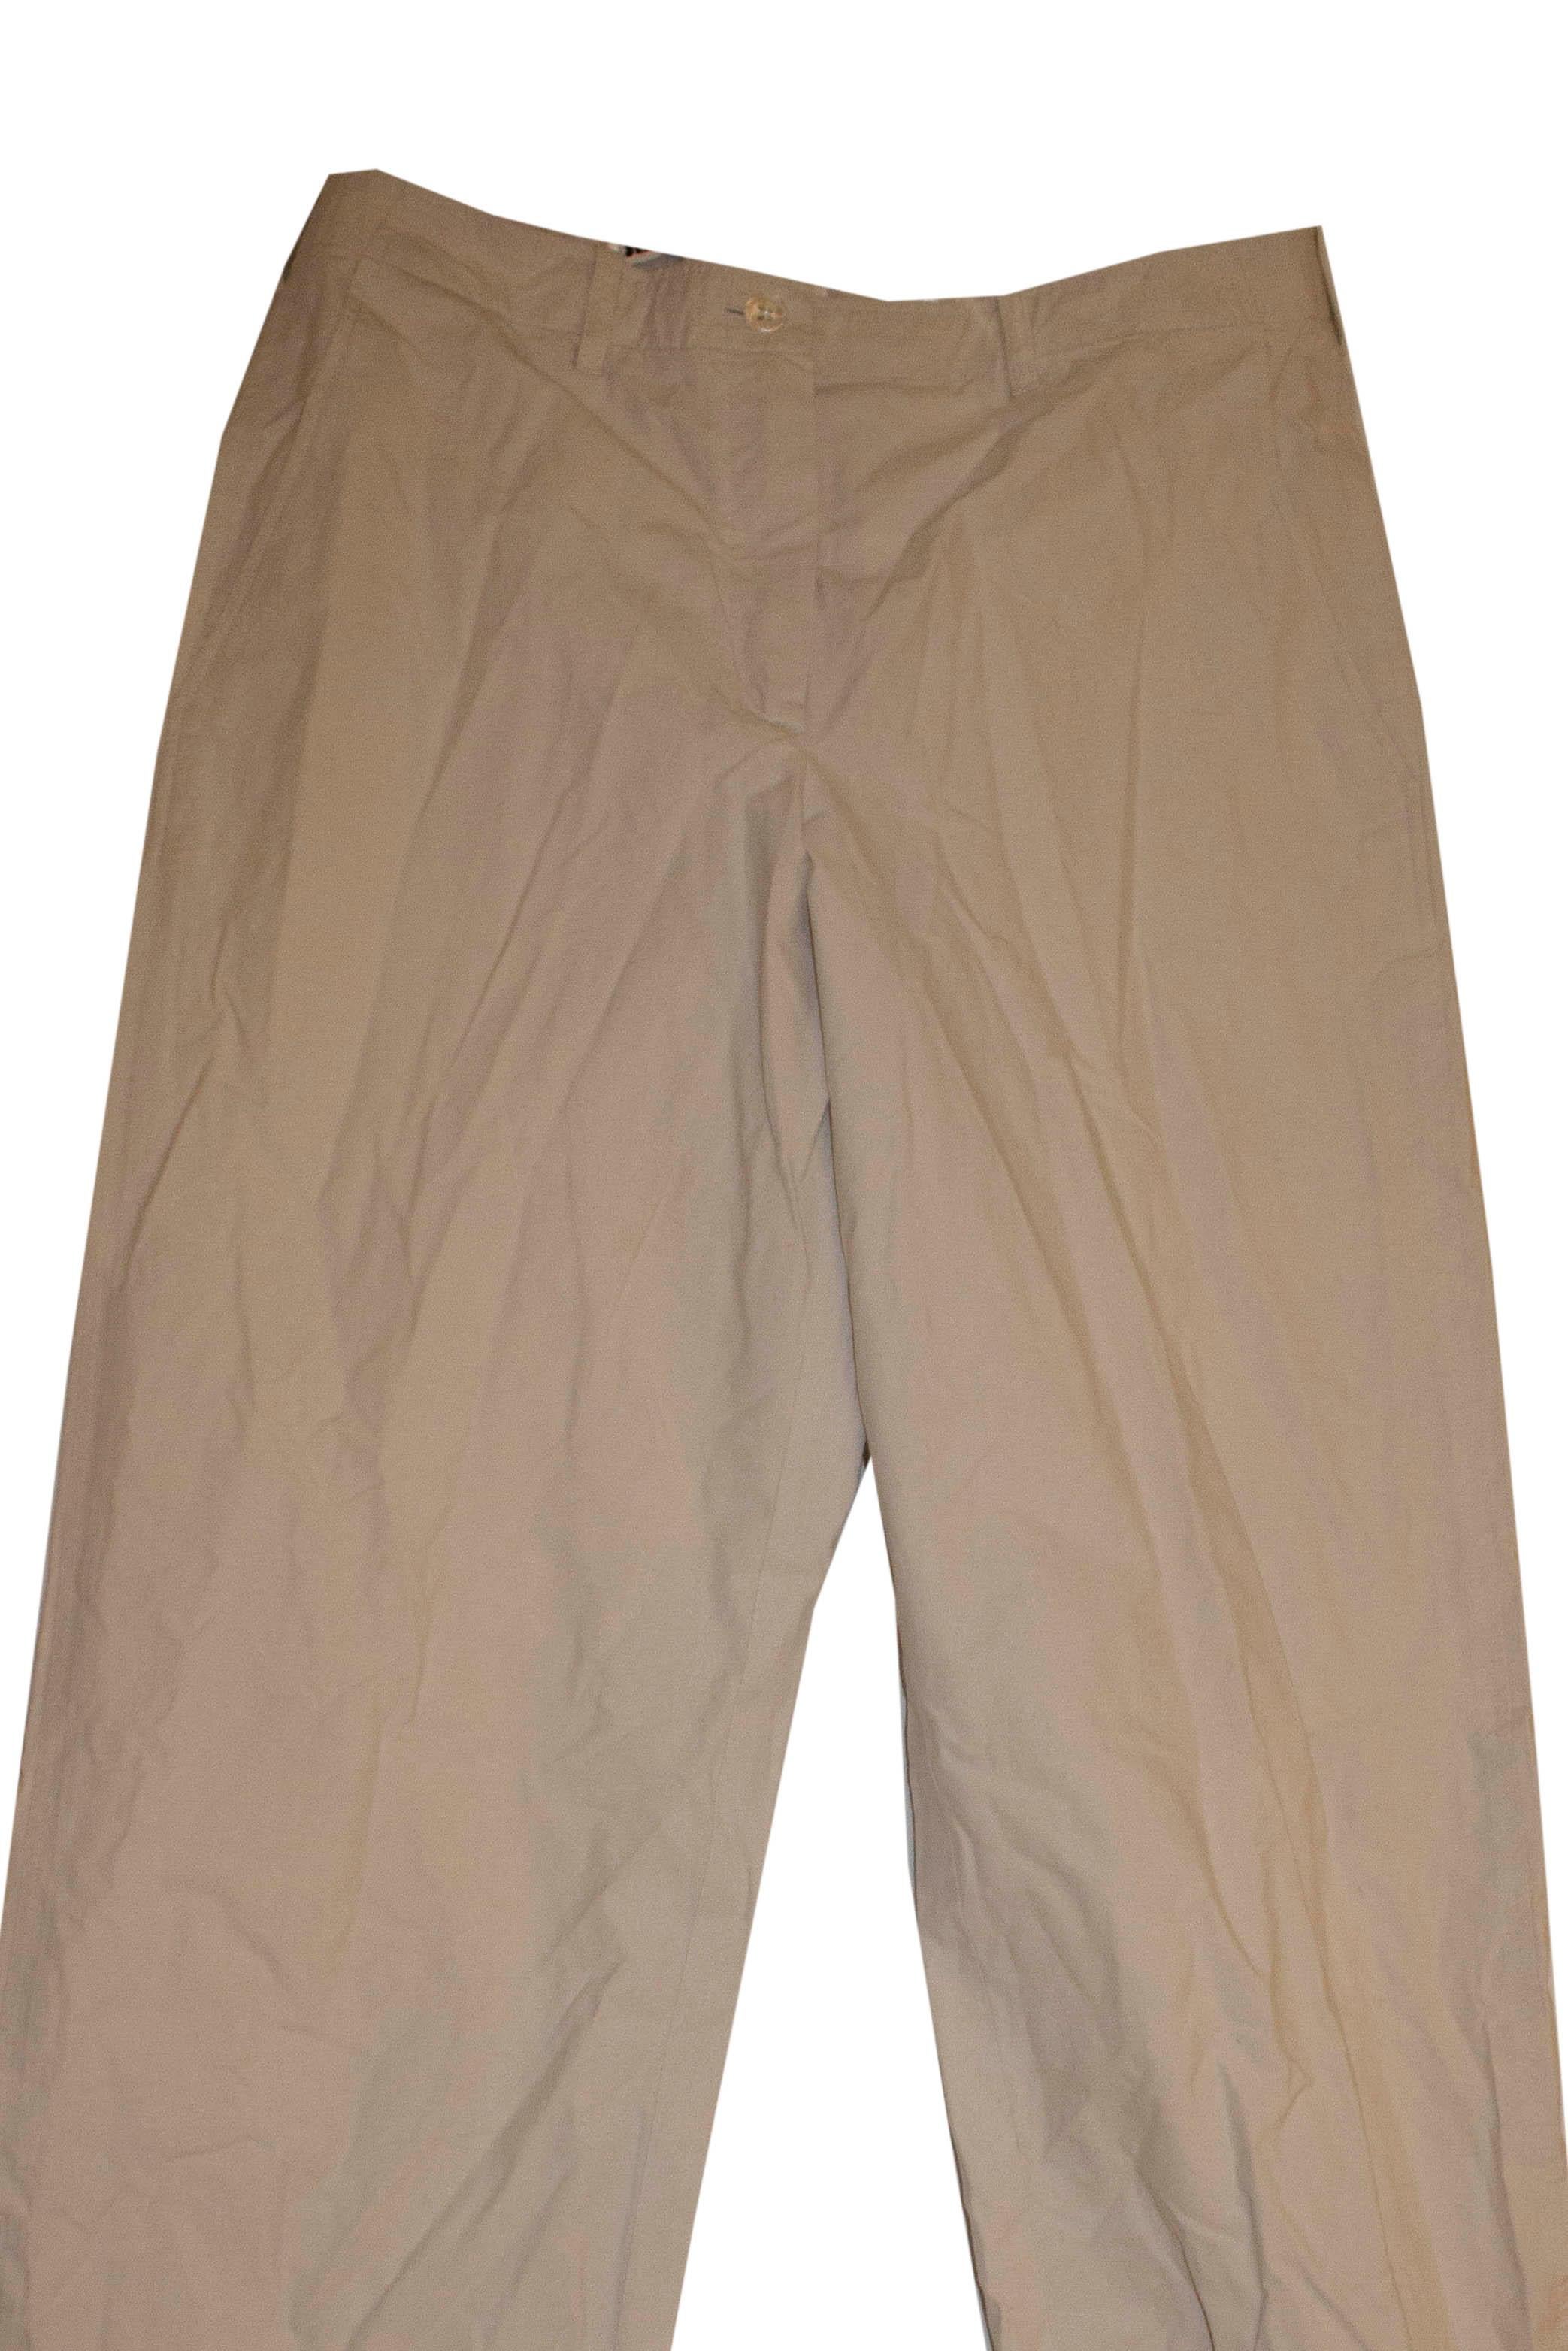 Brown Jil Sander White Cotton Trousers For Sale